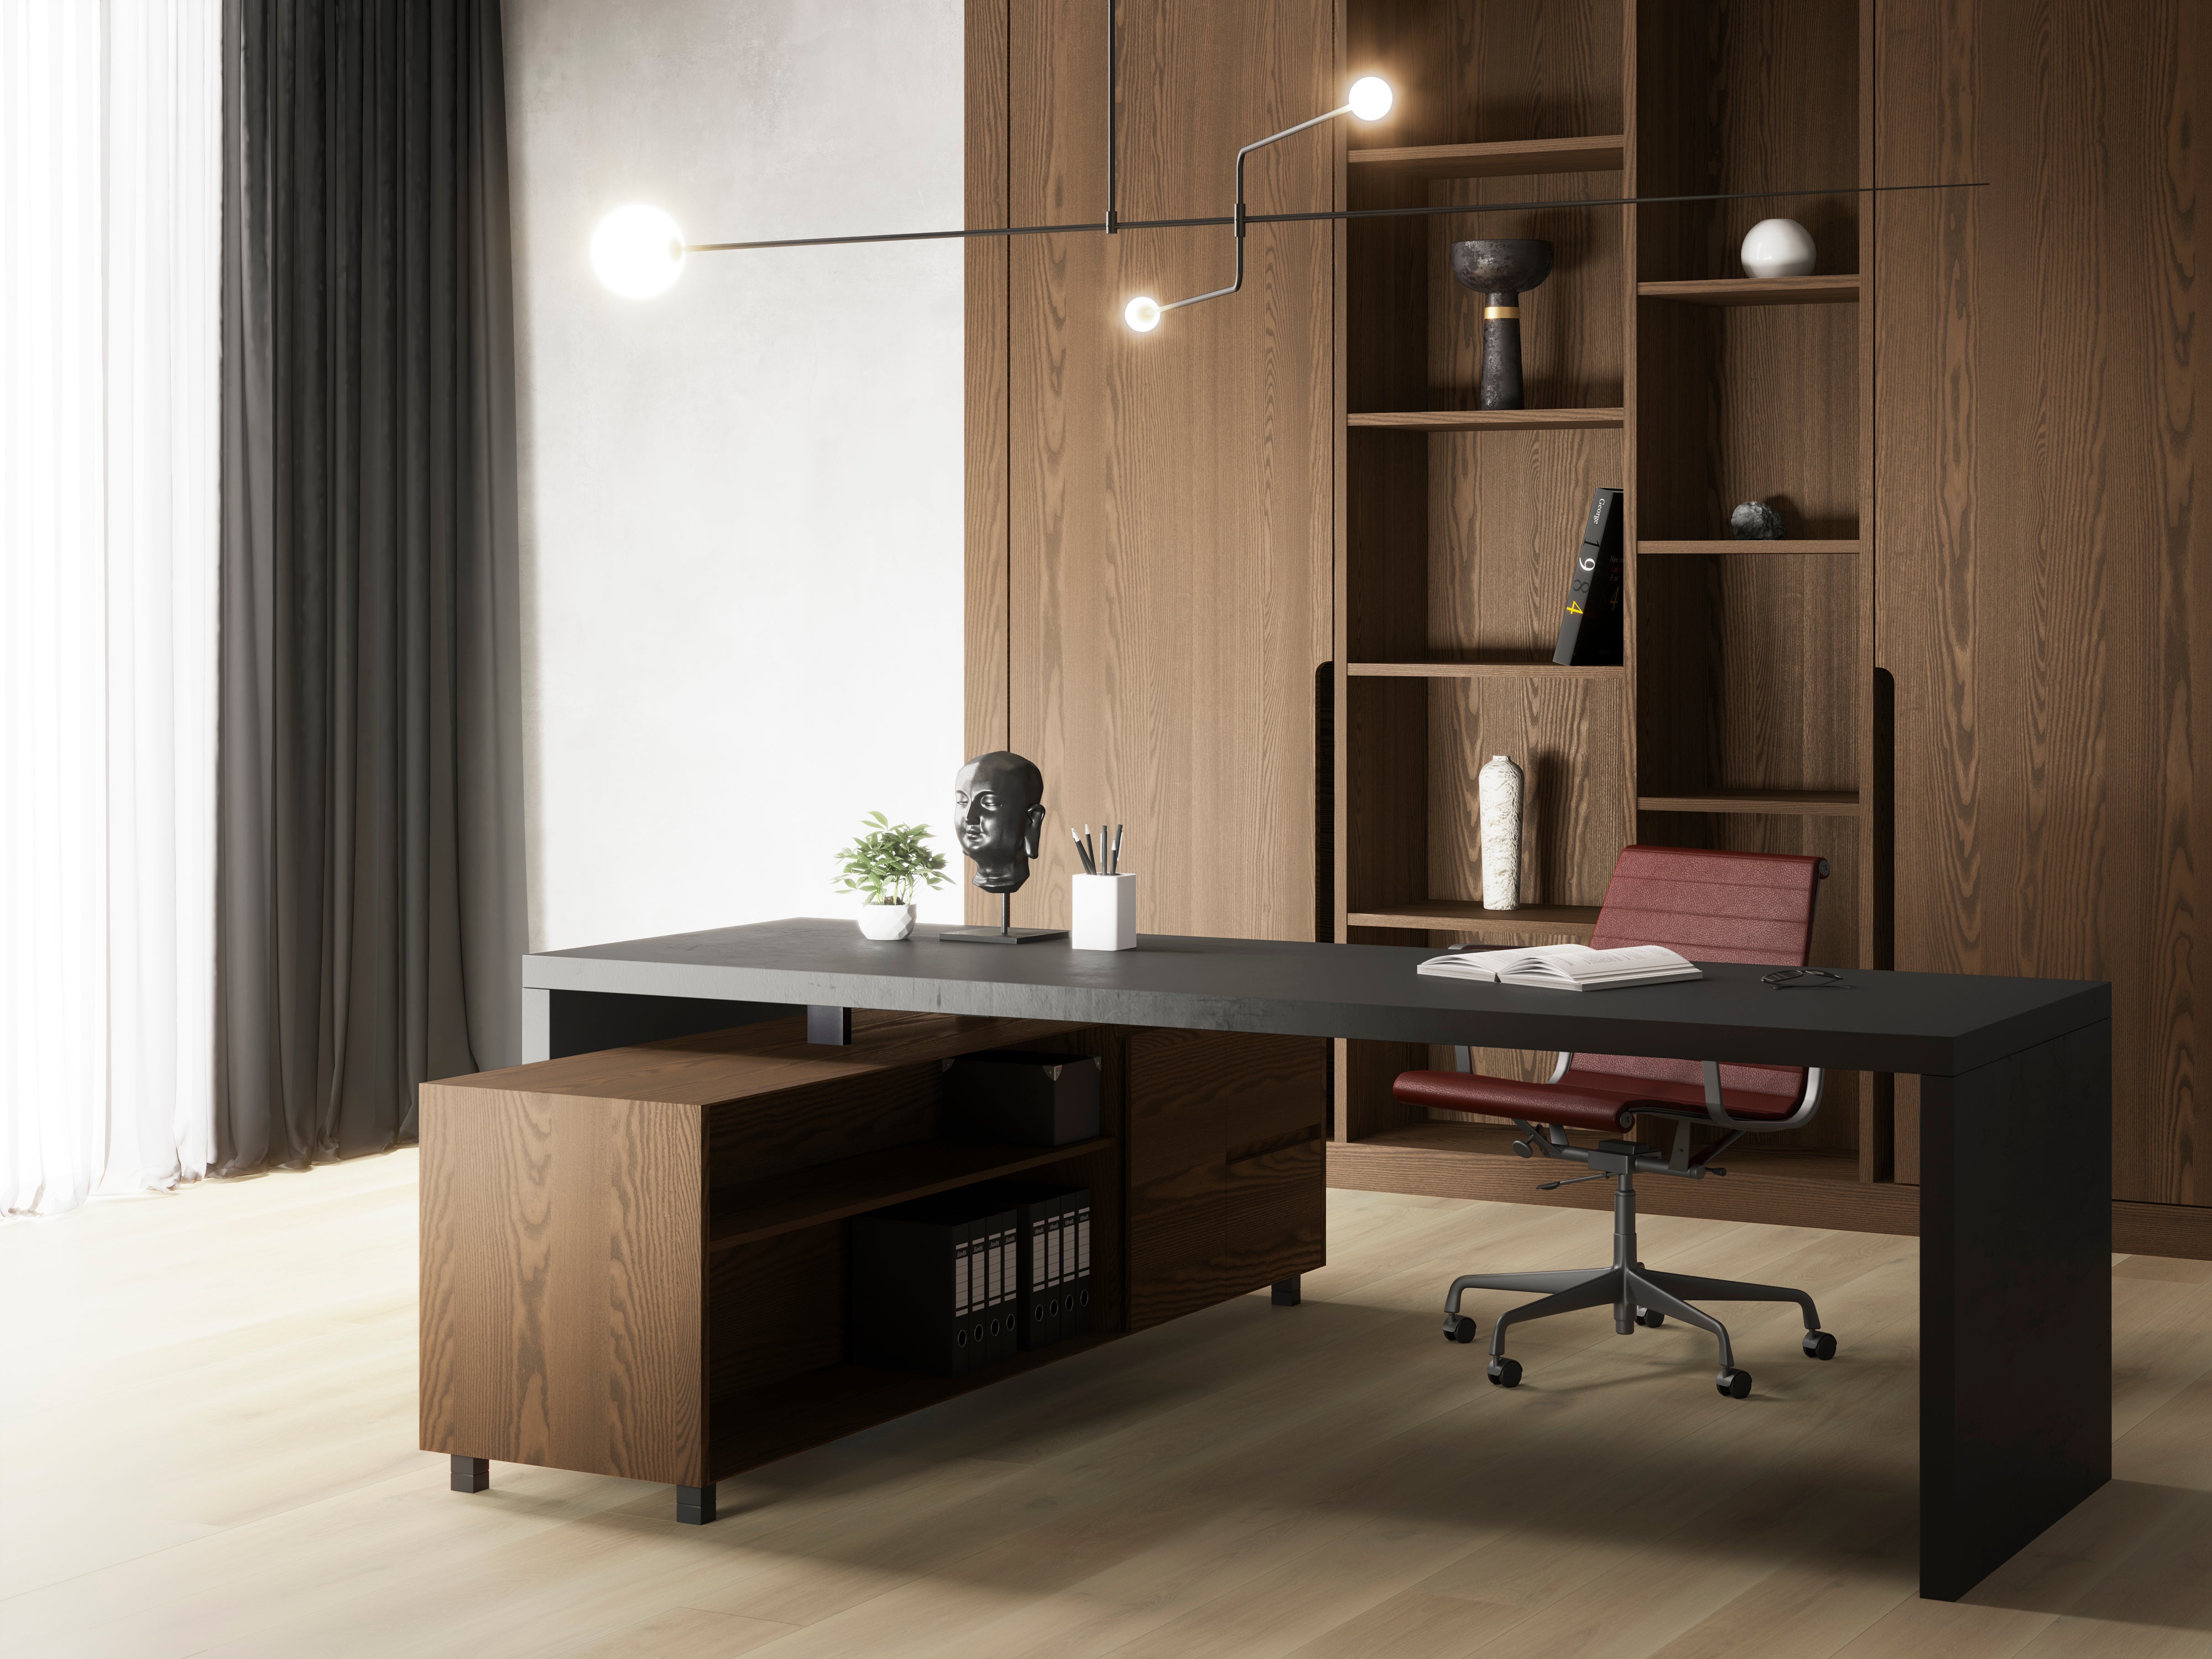 Astrata Slats: Wood Touch for Versatile Interior Design